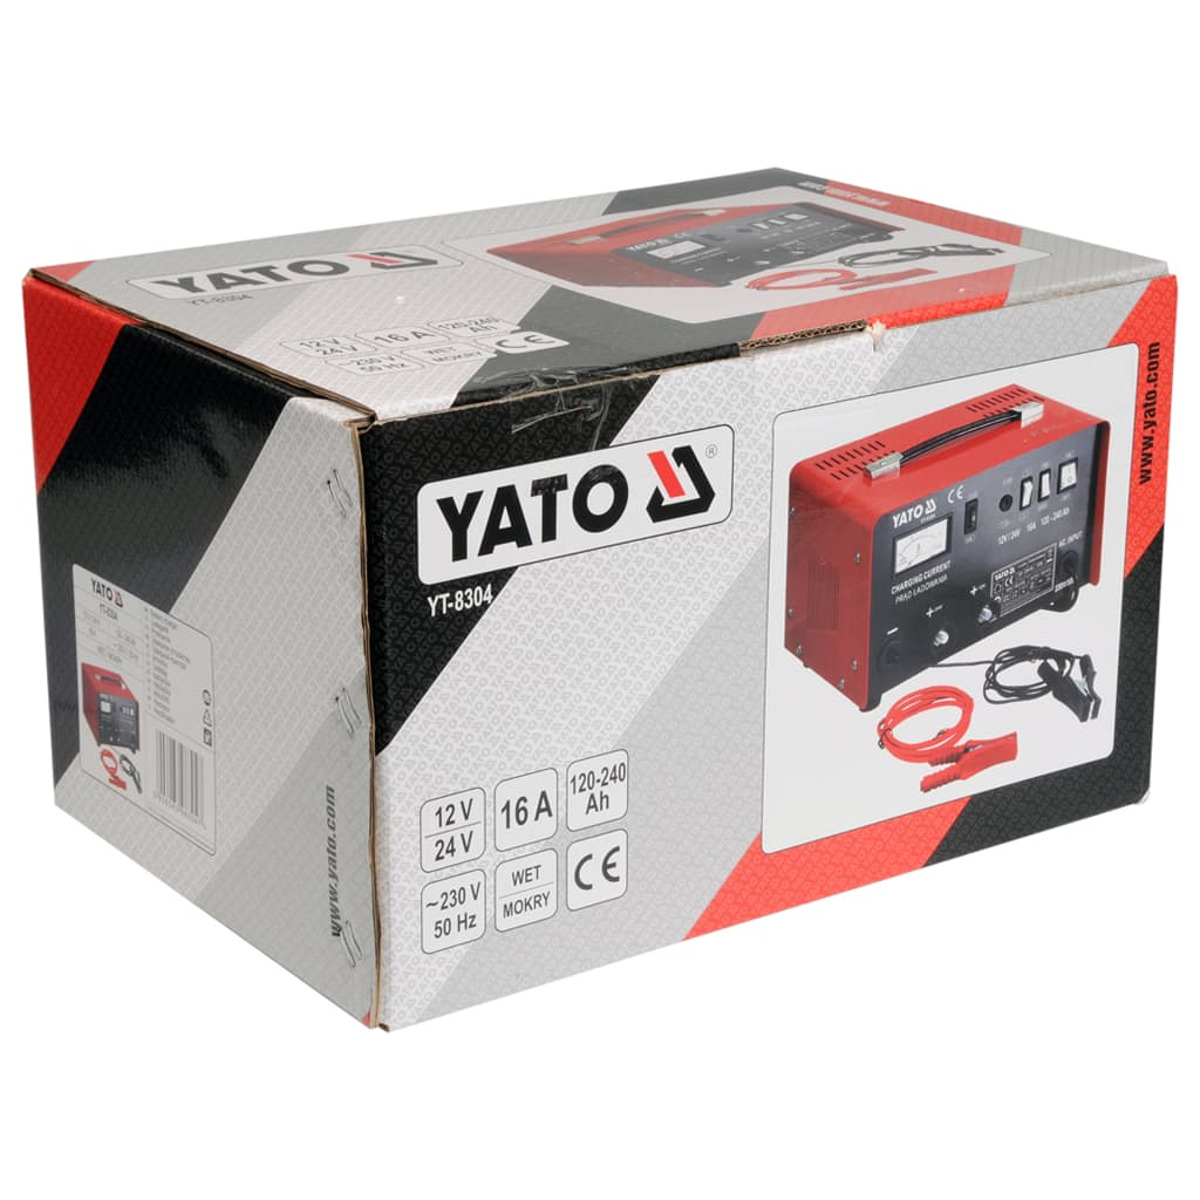 YATO 434492 Batterieladegerät Universal, Red